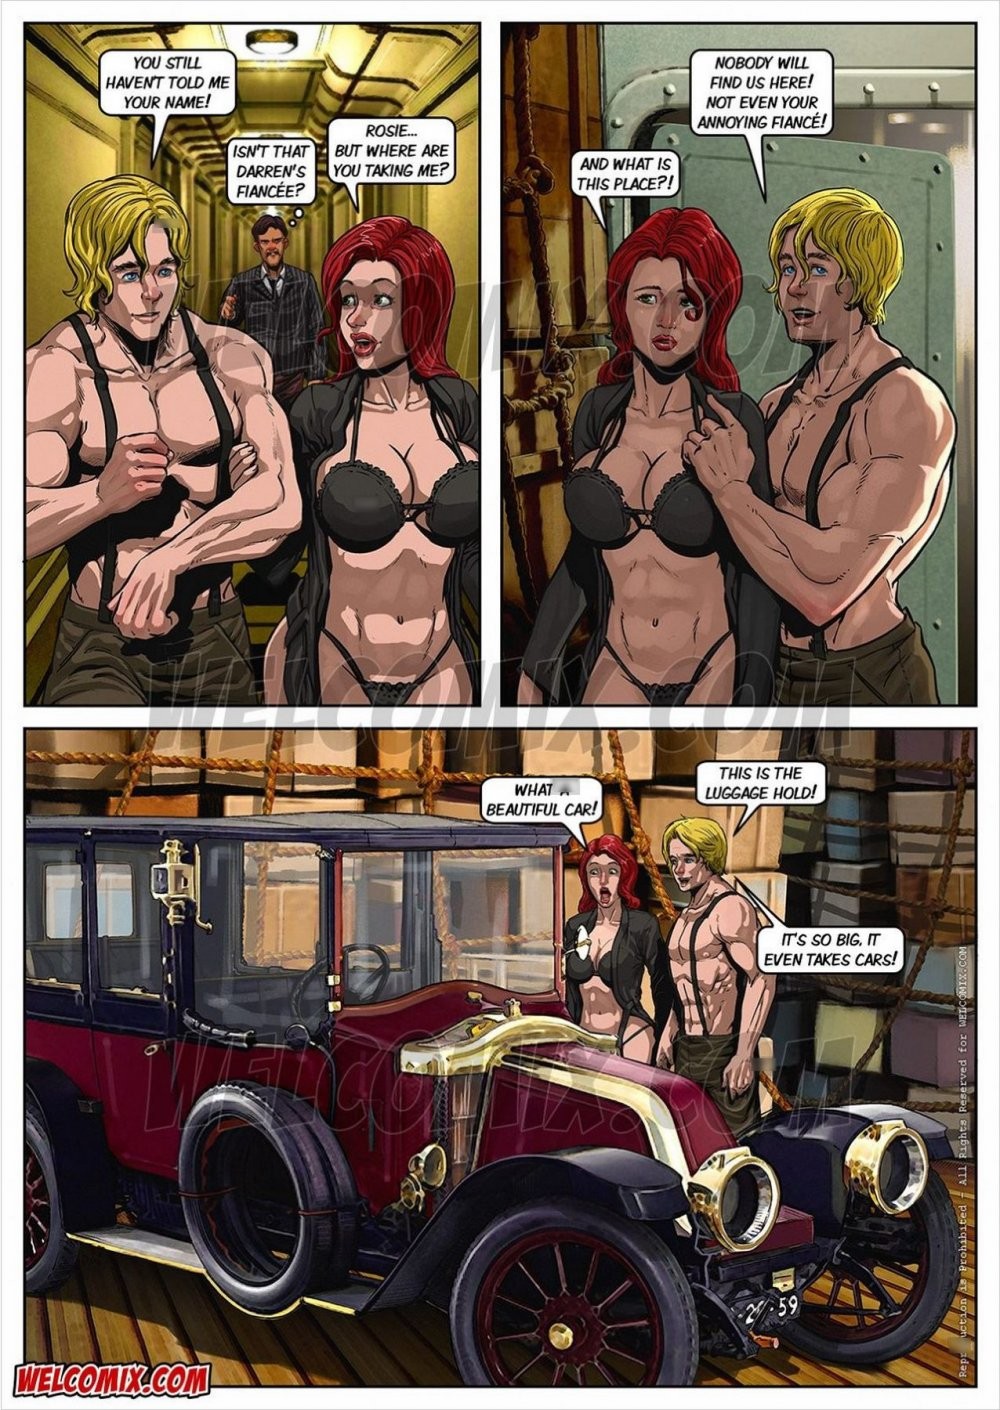 Titanic Porn - Titanic Porn comic, Rule 34 comic, Cartoon porn comic - GOLDENCOMICS